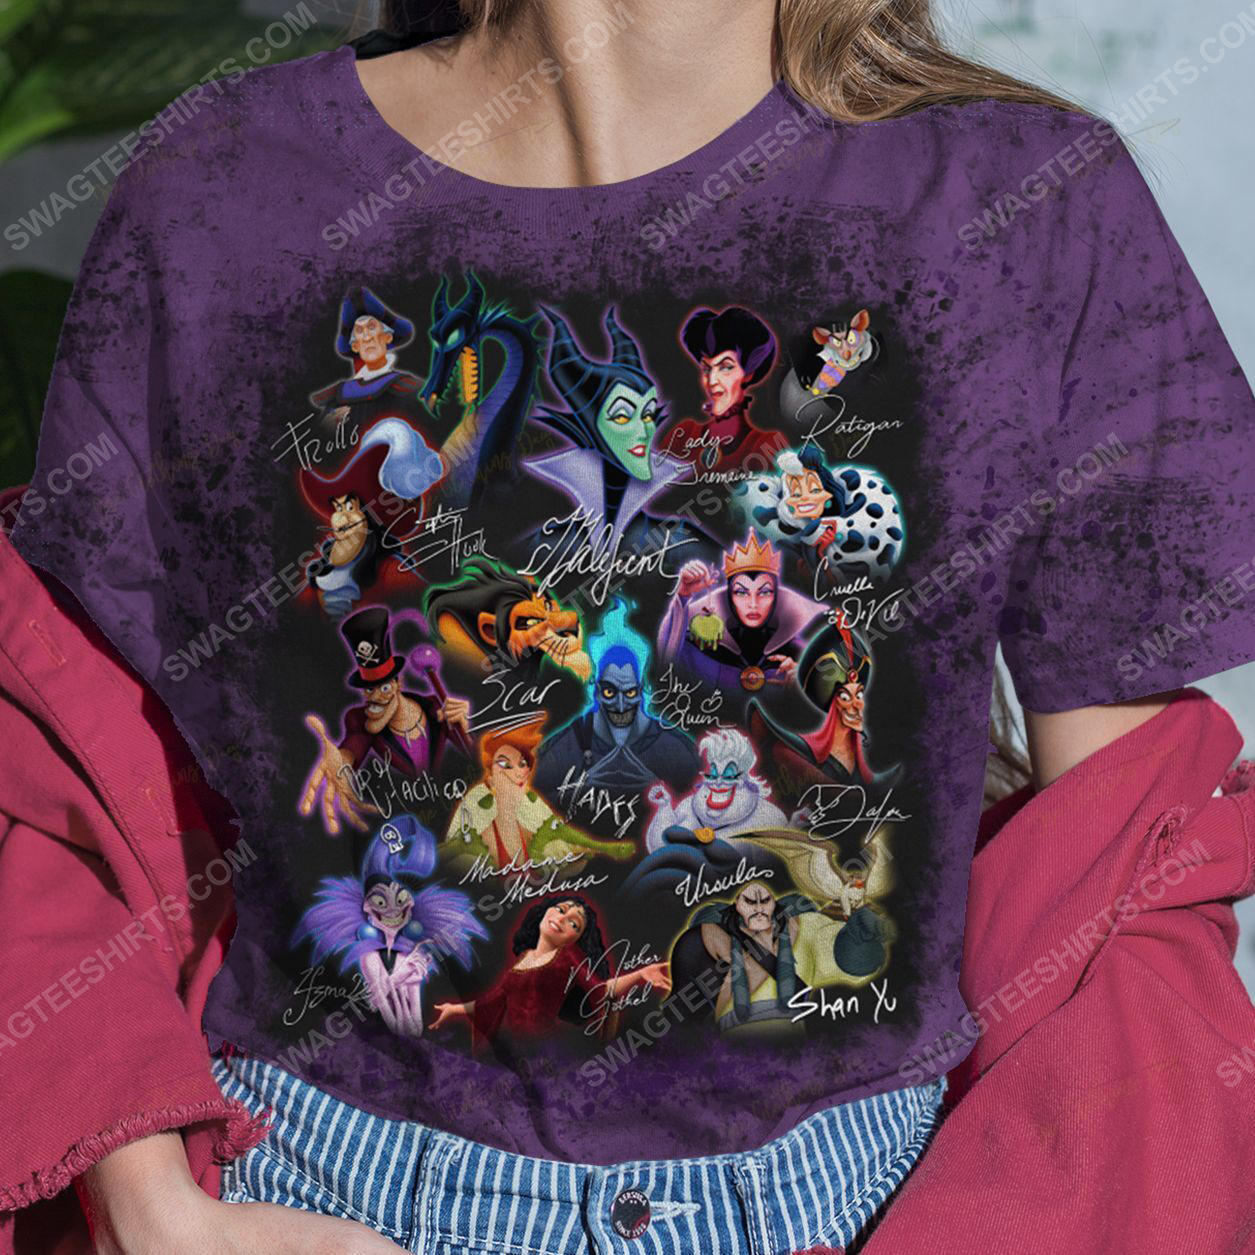 Iconic disney villains characters halloween night shirt 3(1)